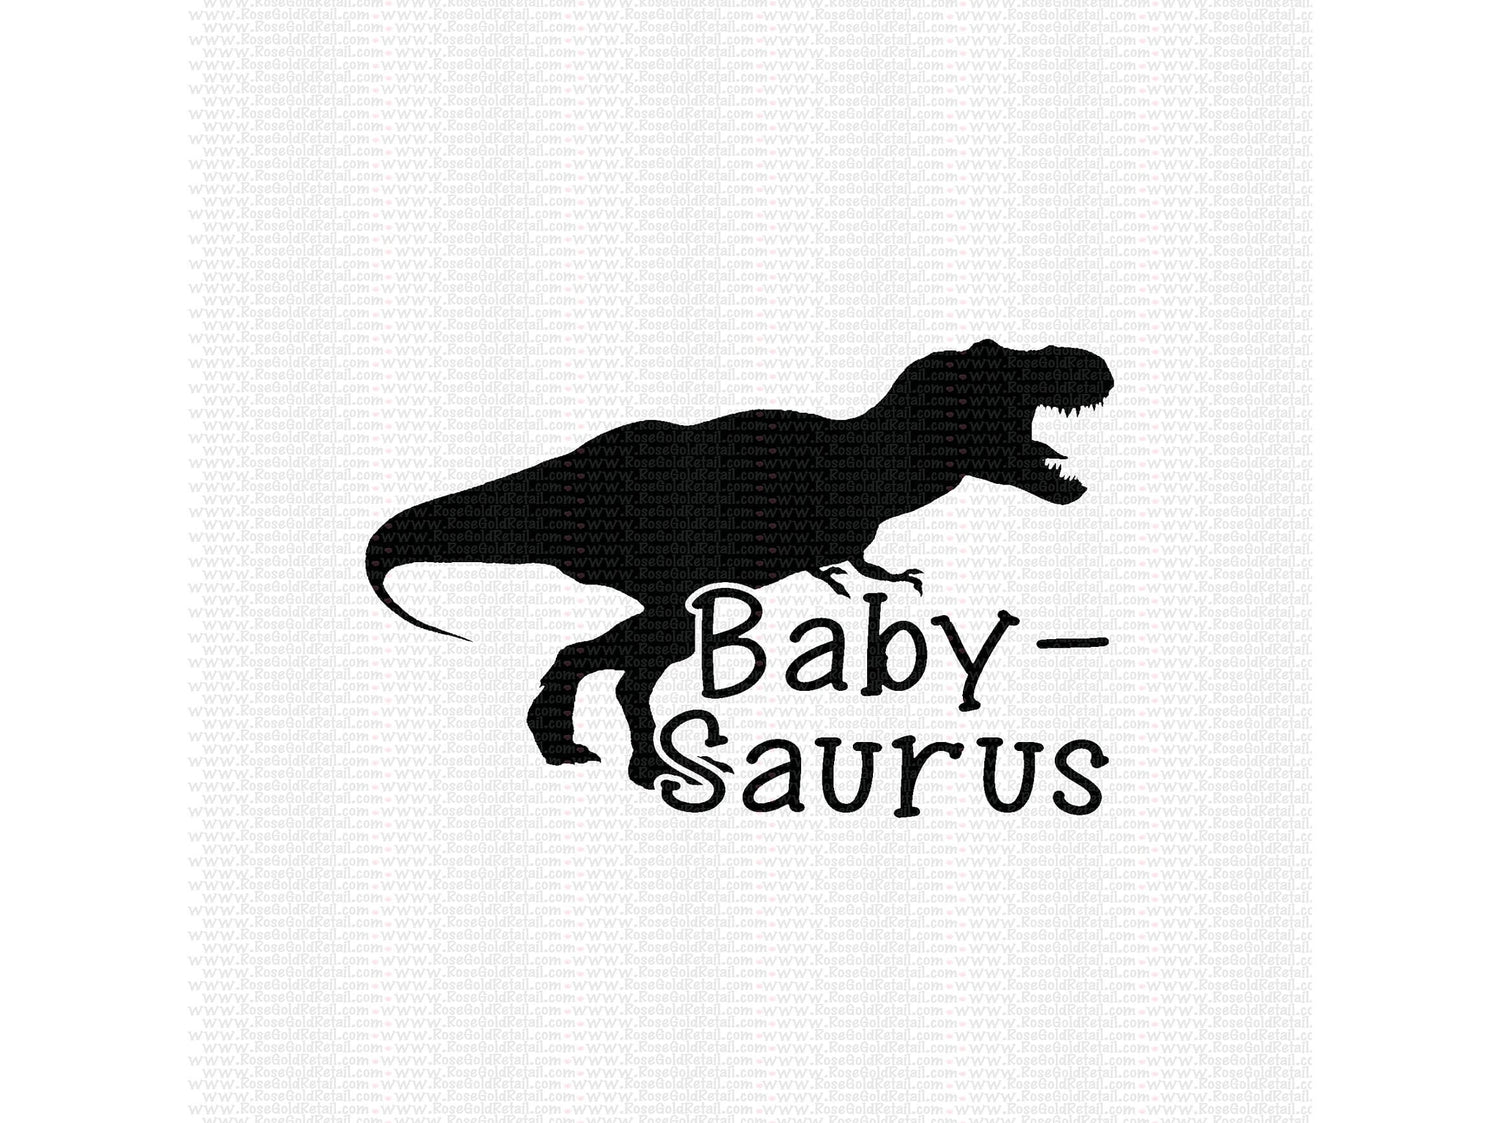 Baby Saurus Screen Print Design - Ready to Press - Ready to Ship